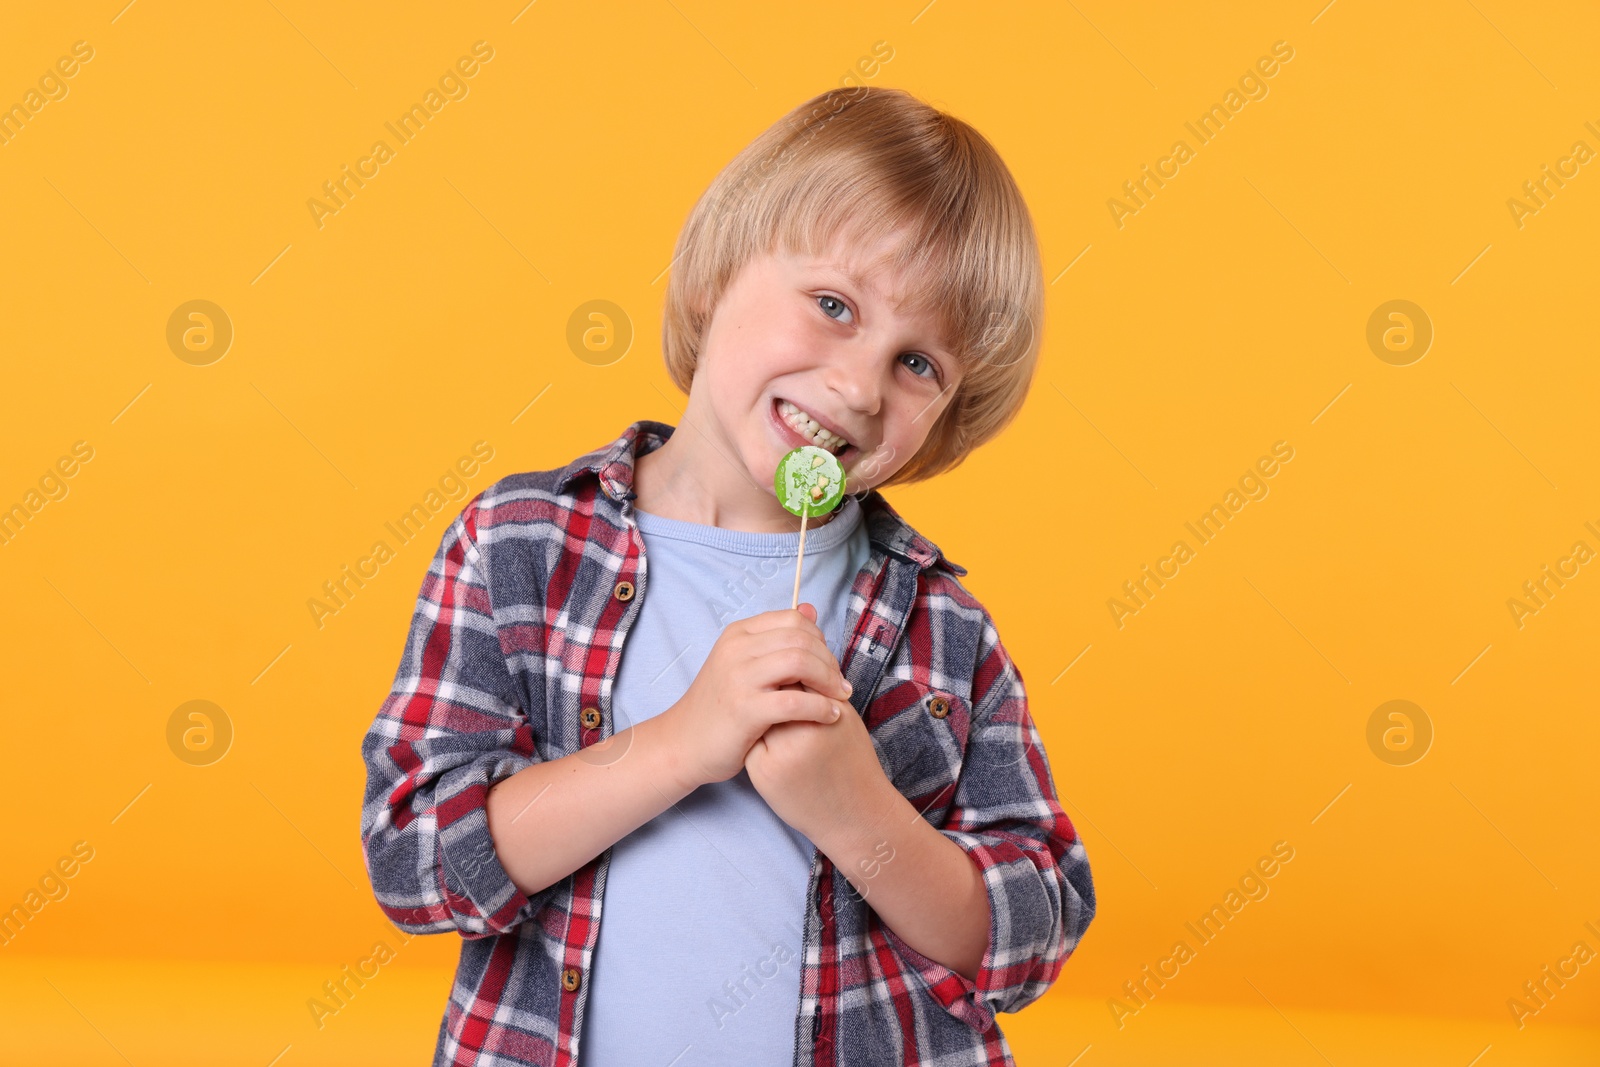 Photo of Cute little boy with lollipop on orange background